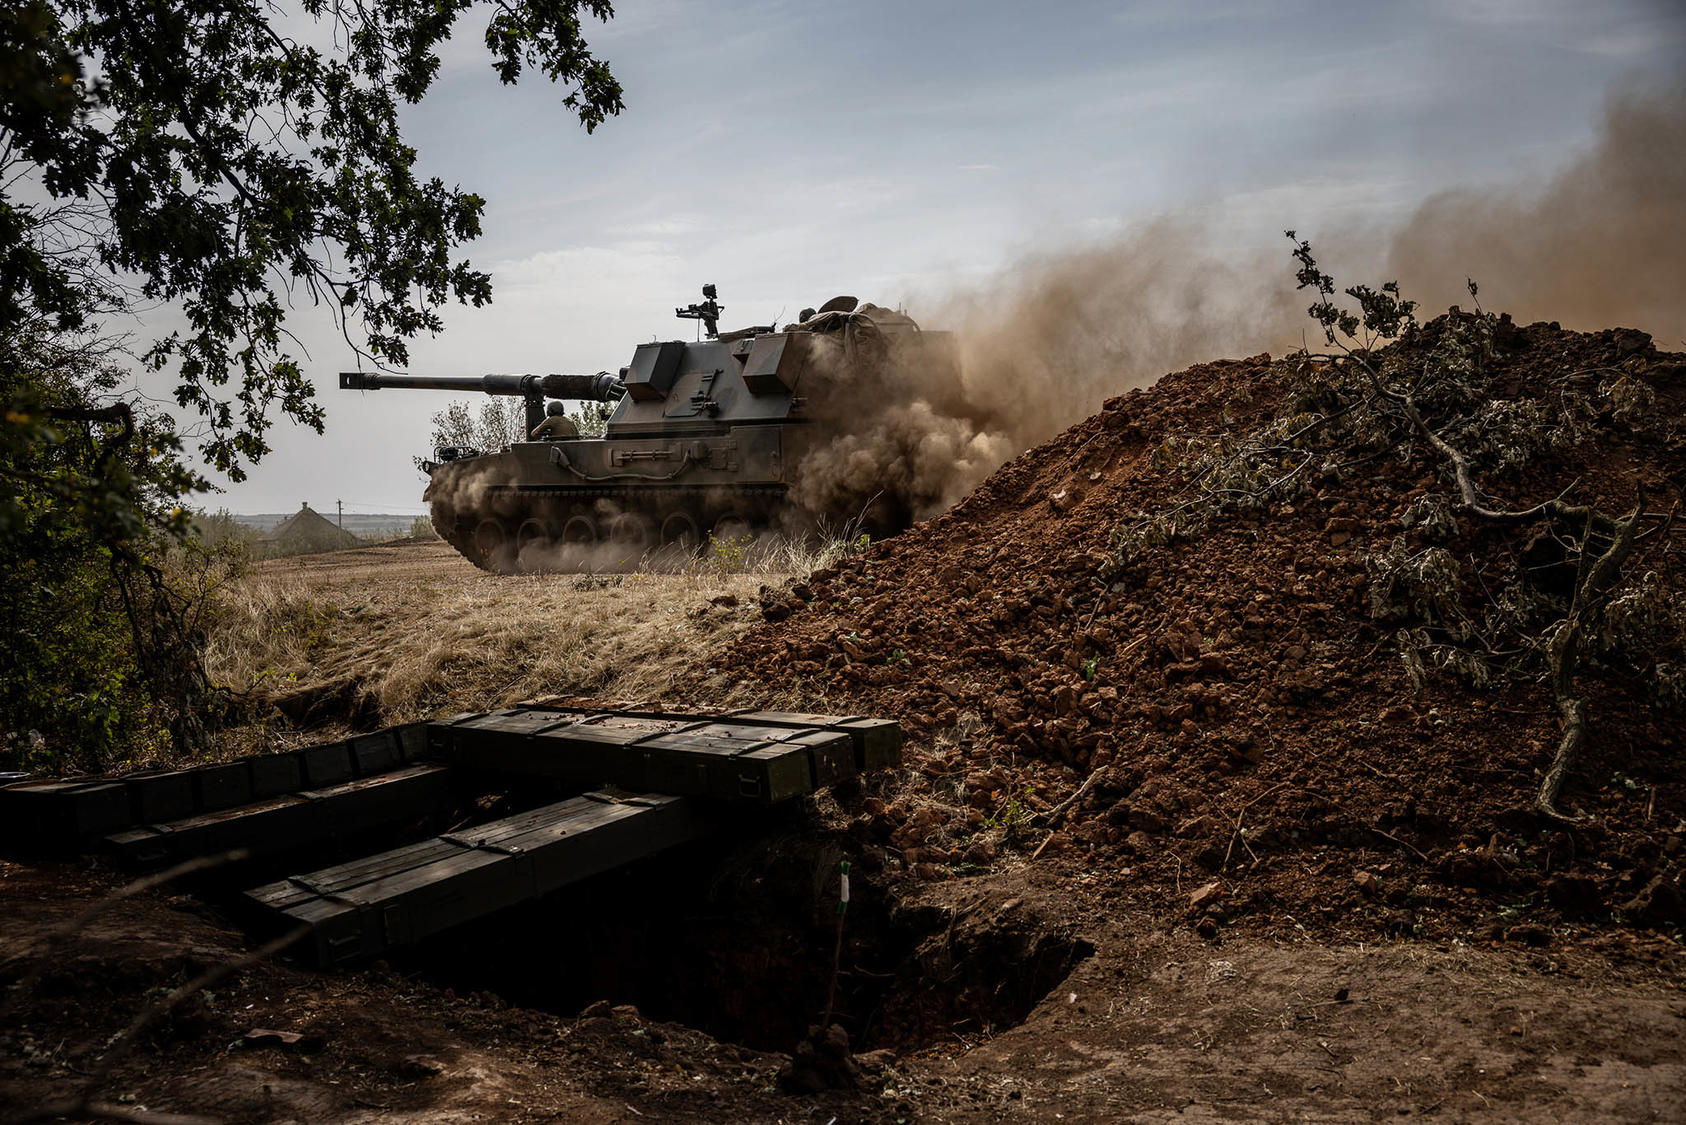 A Ukrainian tank near the frontlines in the Donbas region of Ukraine. August 26, 2022. (Jim Huylebroek/The New York Times)